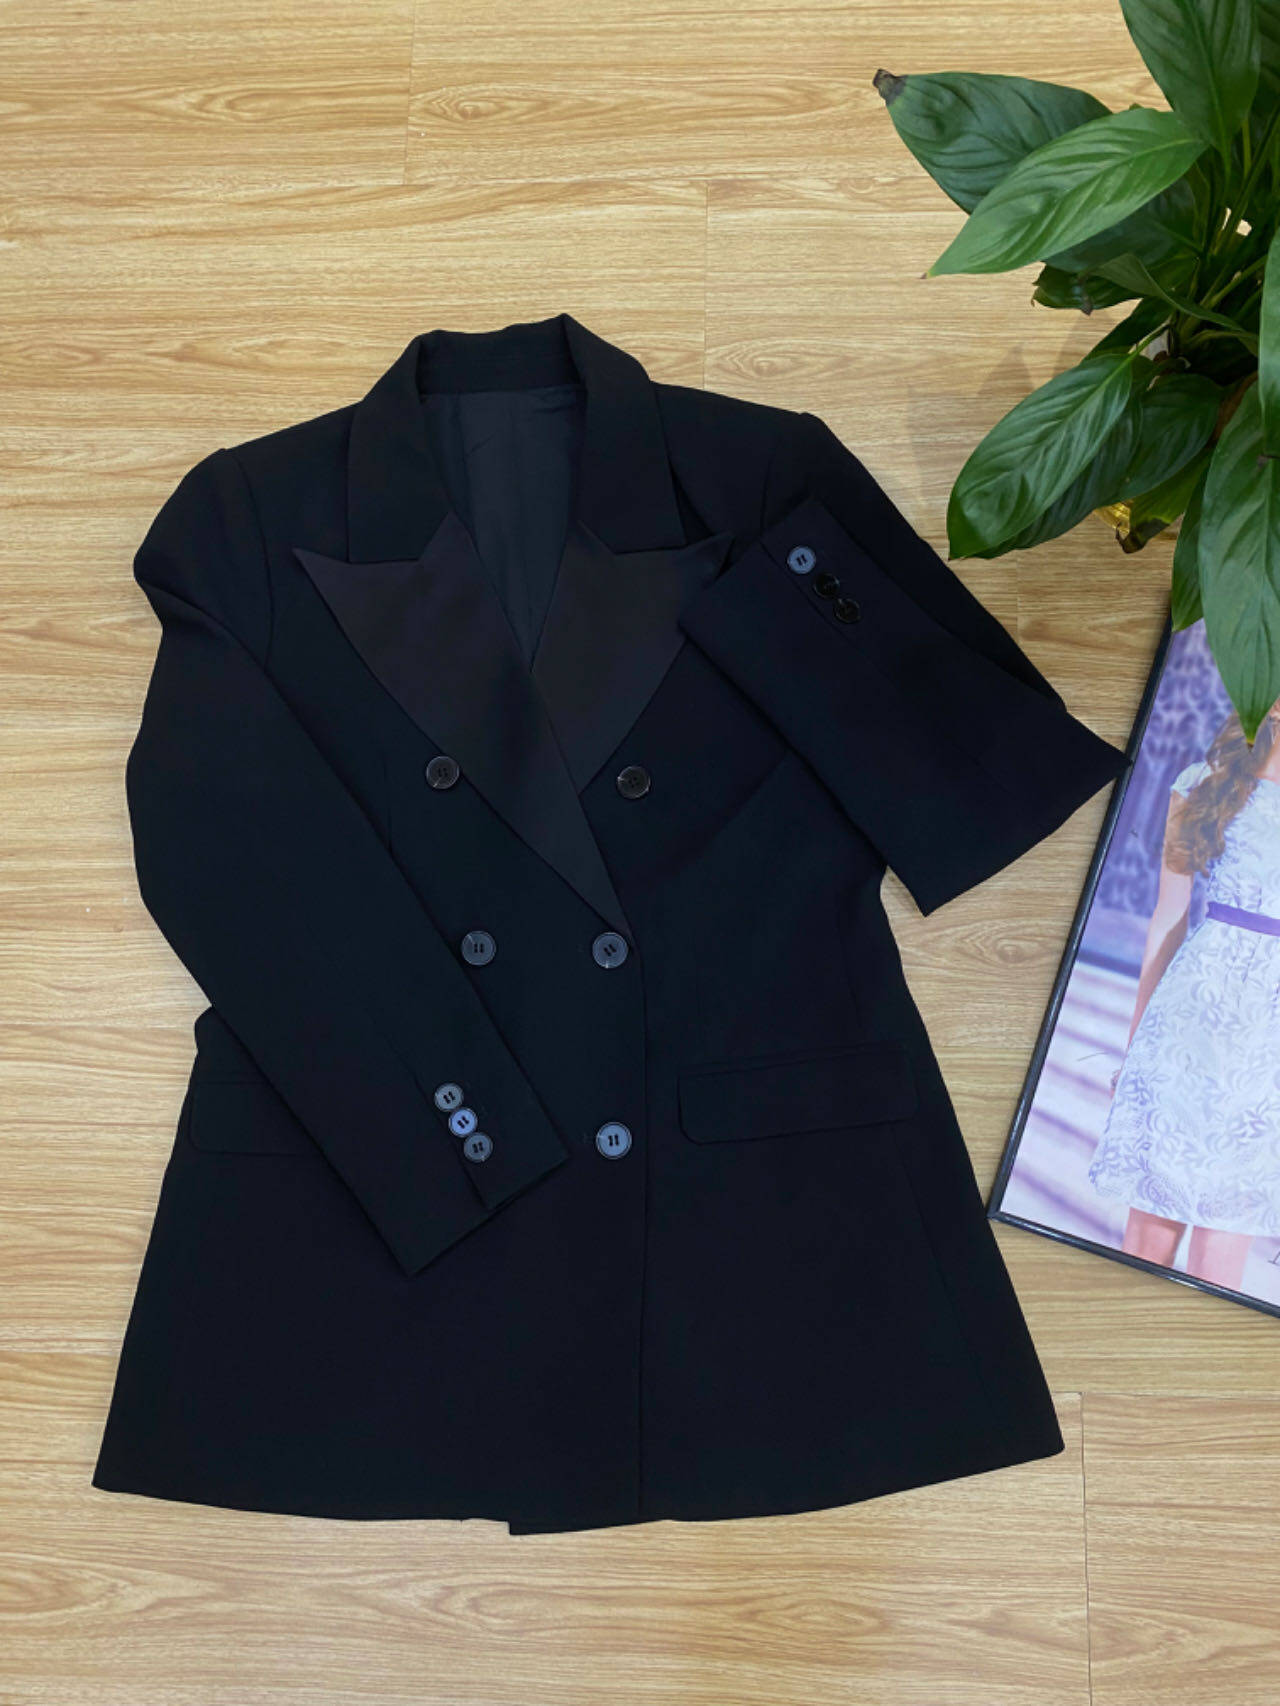 Classic Fashion City Gentleman Business Professional Formal Dress Groom Dress Slim Fit Suit Thin Coat